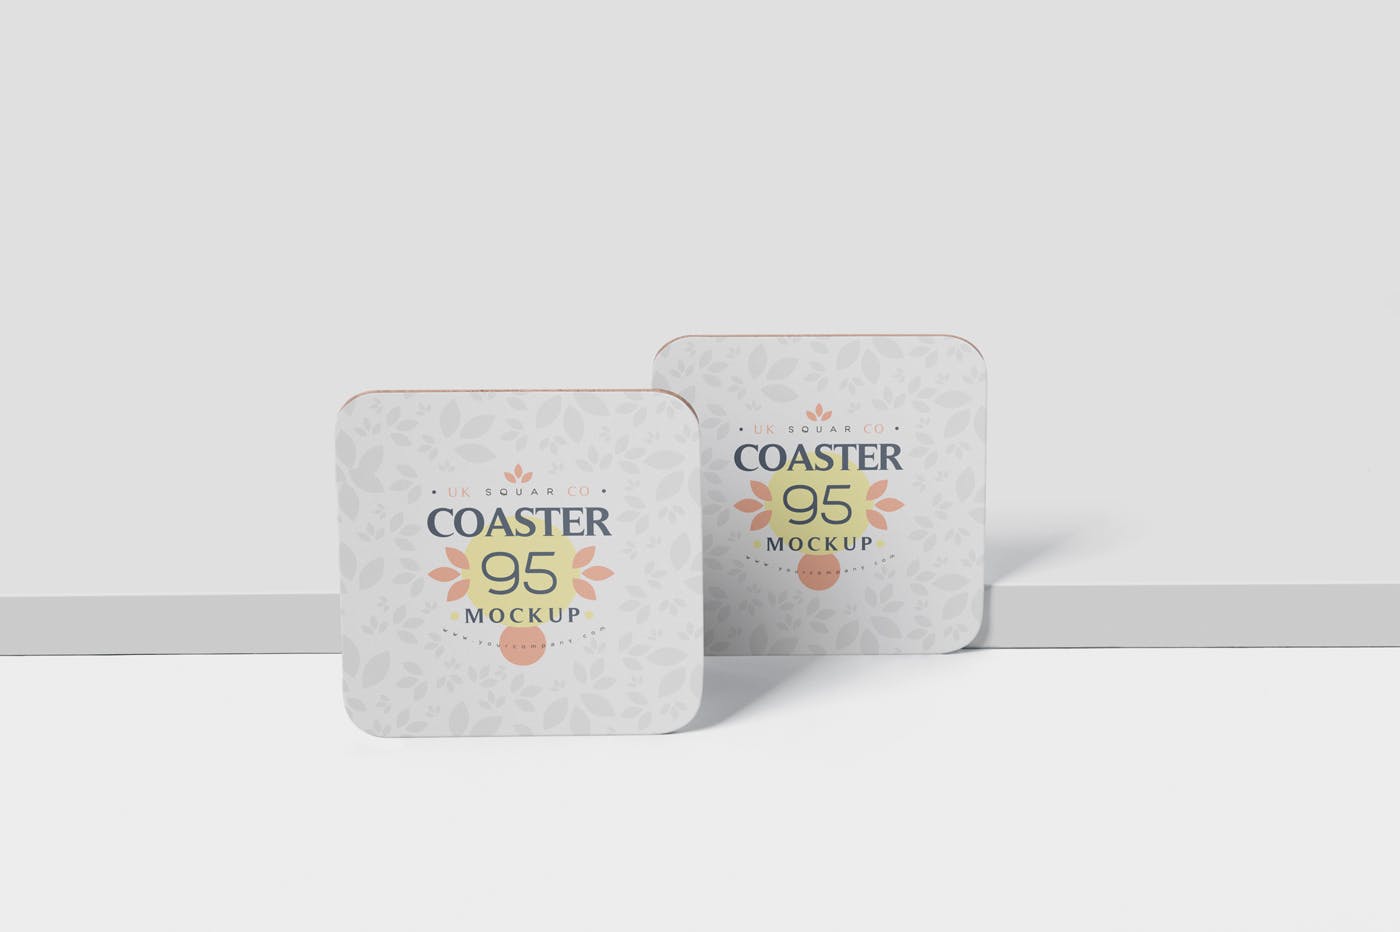 圆角方形杯垫图案设计16图库精选模板 Square Coaster Mock-Up with Round Corner插图(3)